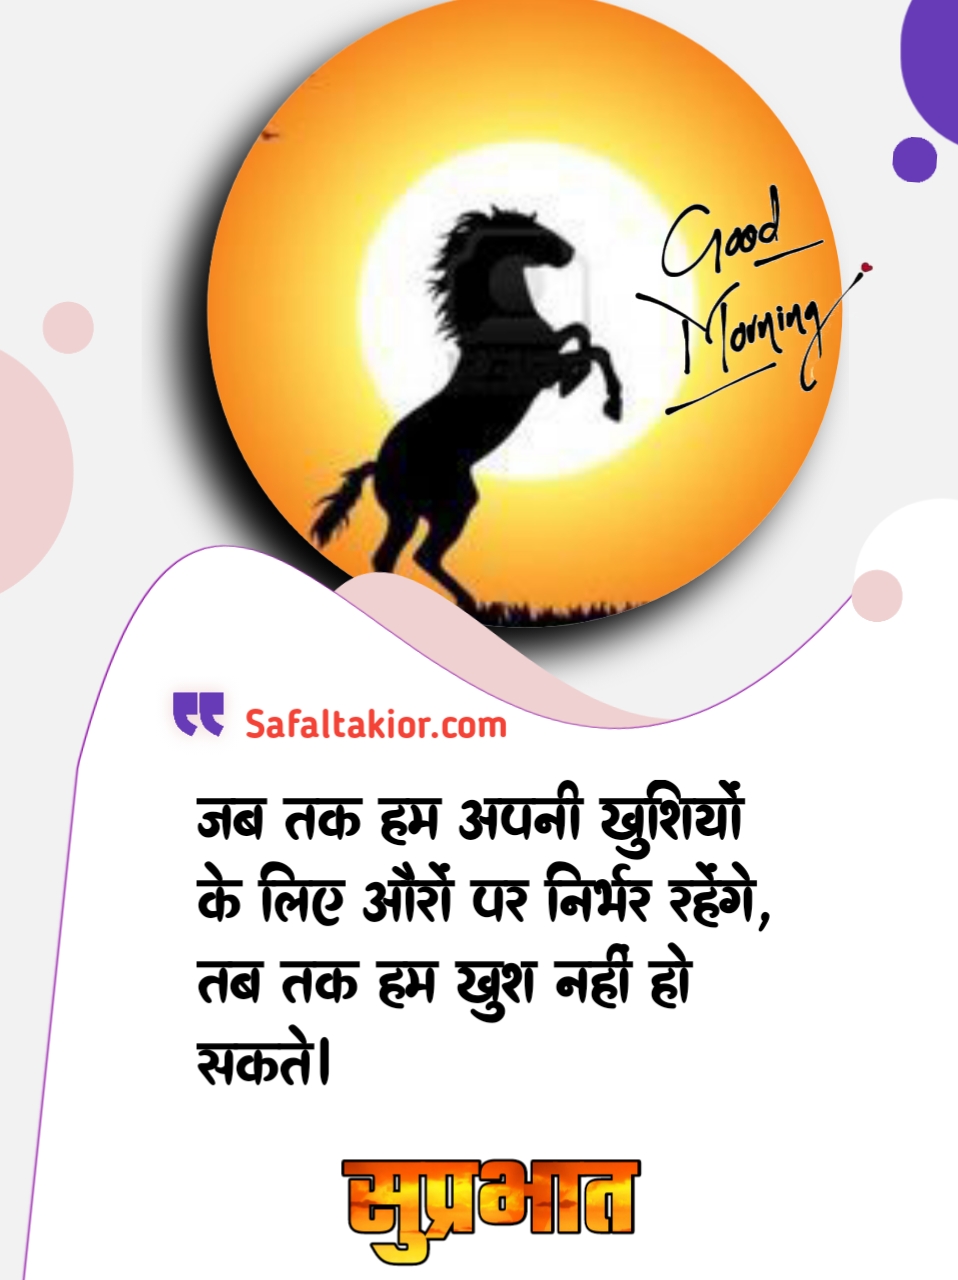 how to say good morning in hindi